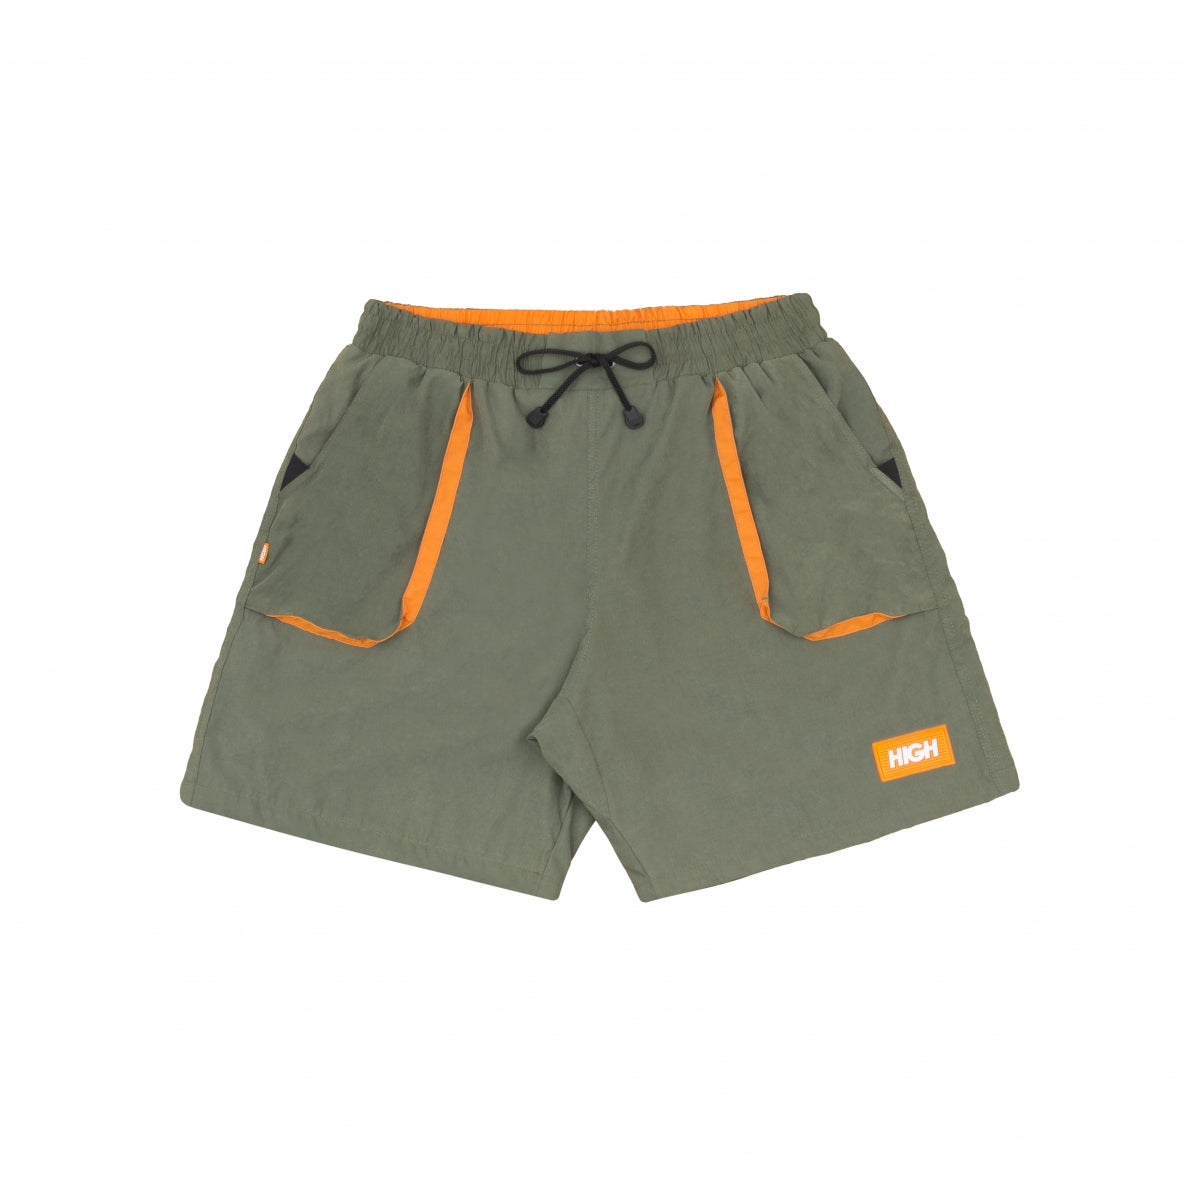 HIGH - Shorts Cargo Green/Orange - Slow Office